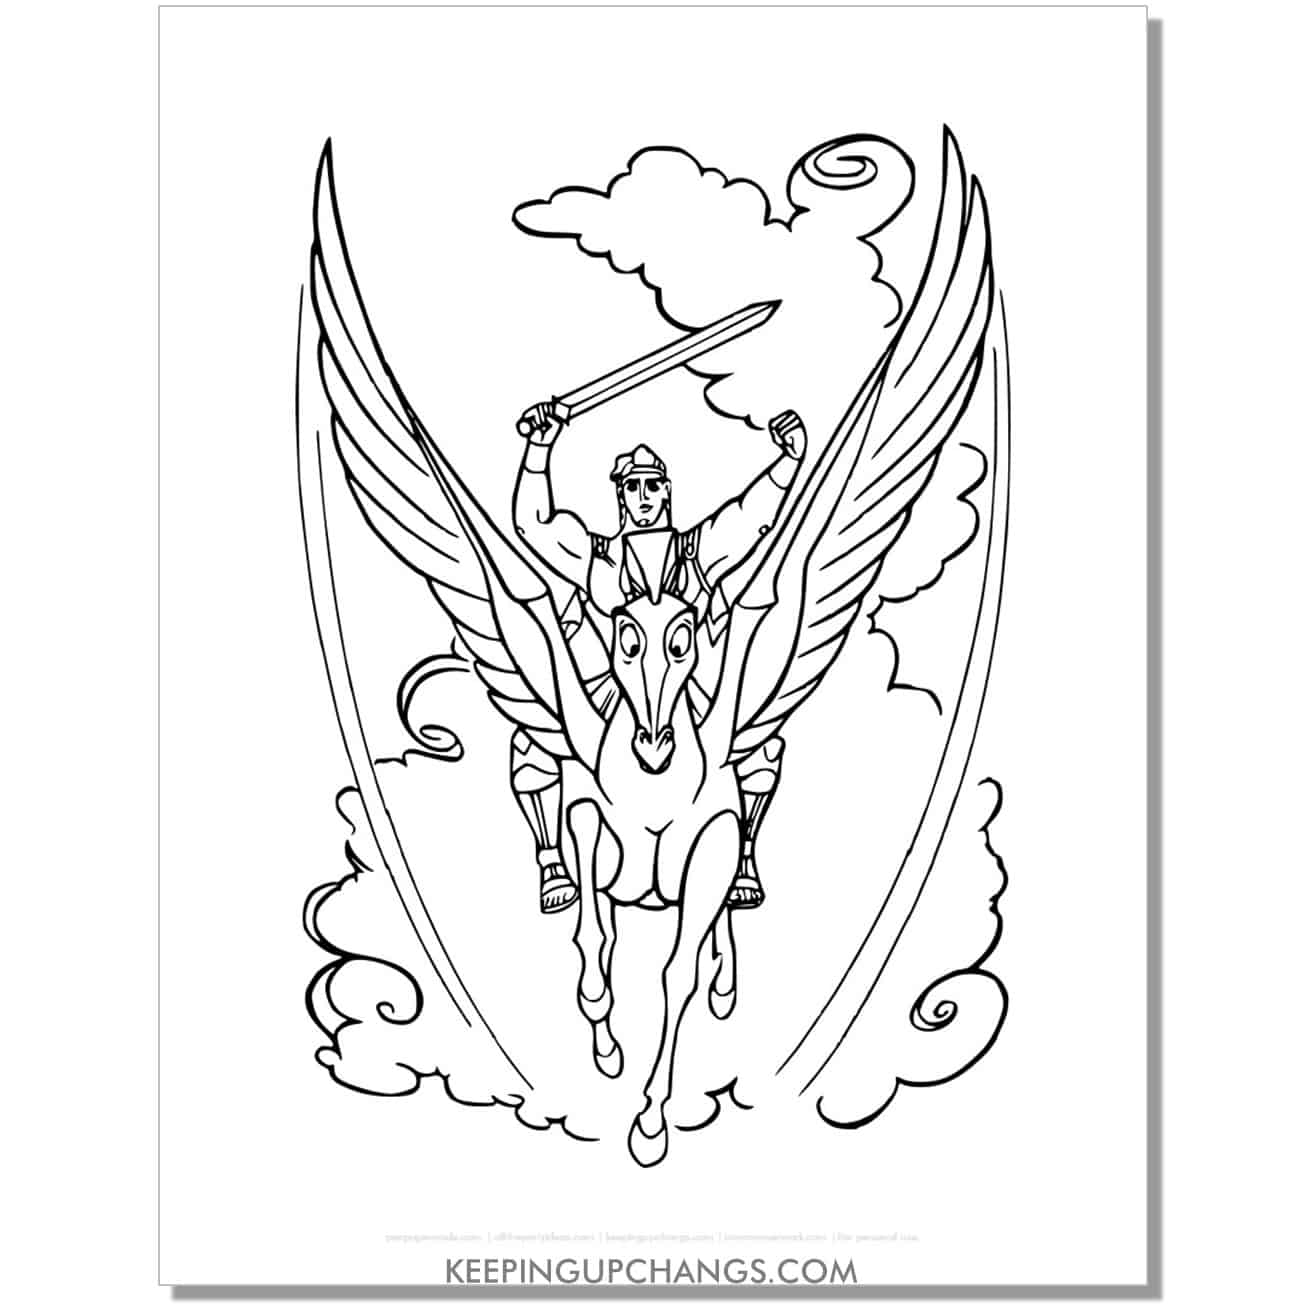 hercules, pegasus flying front view coloring page, sheet.